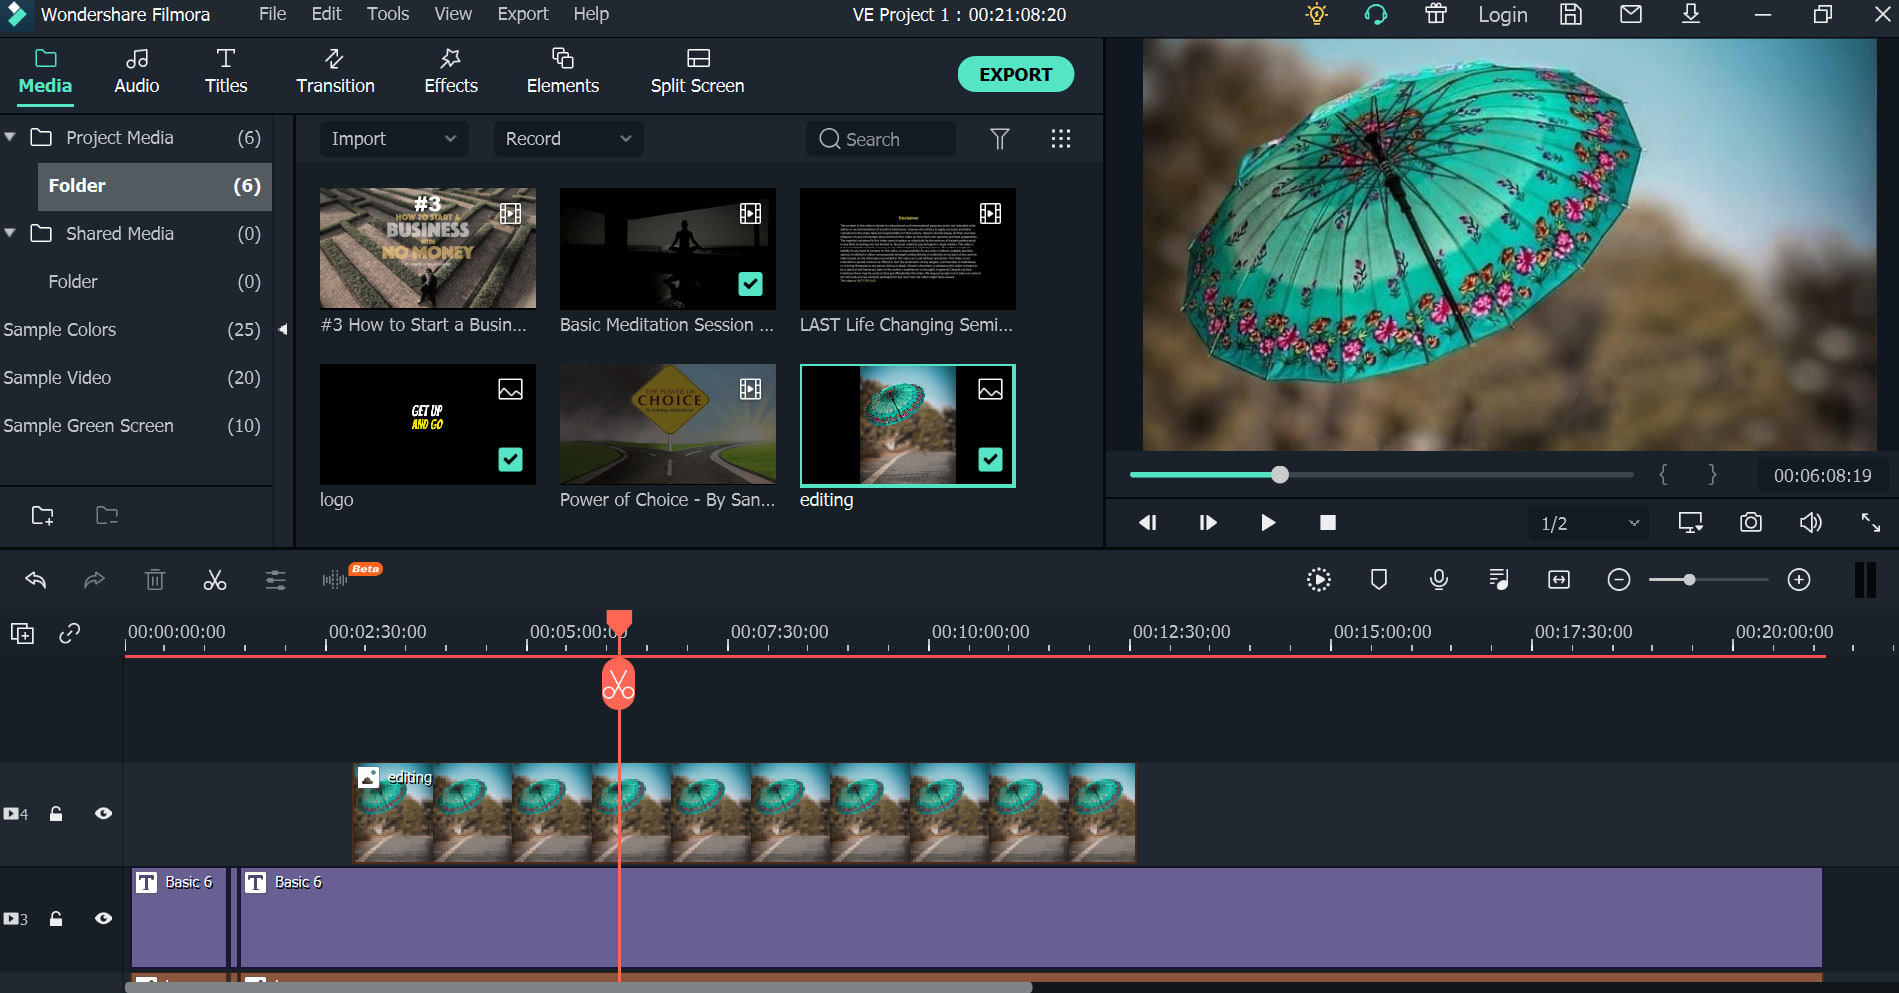 CapCut vs Wondershare Filmora Choose Best Video Editing App